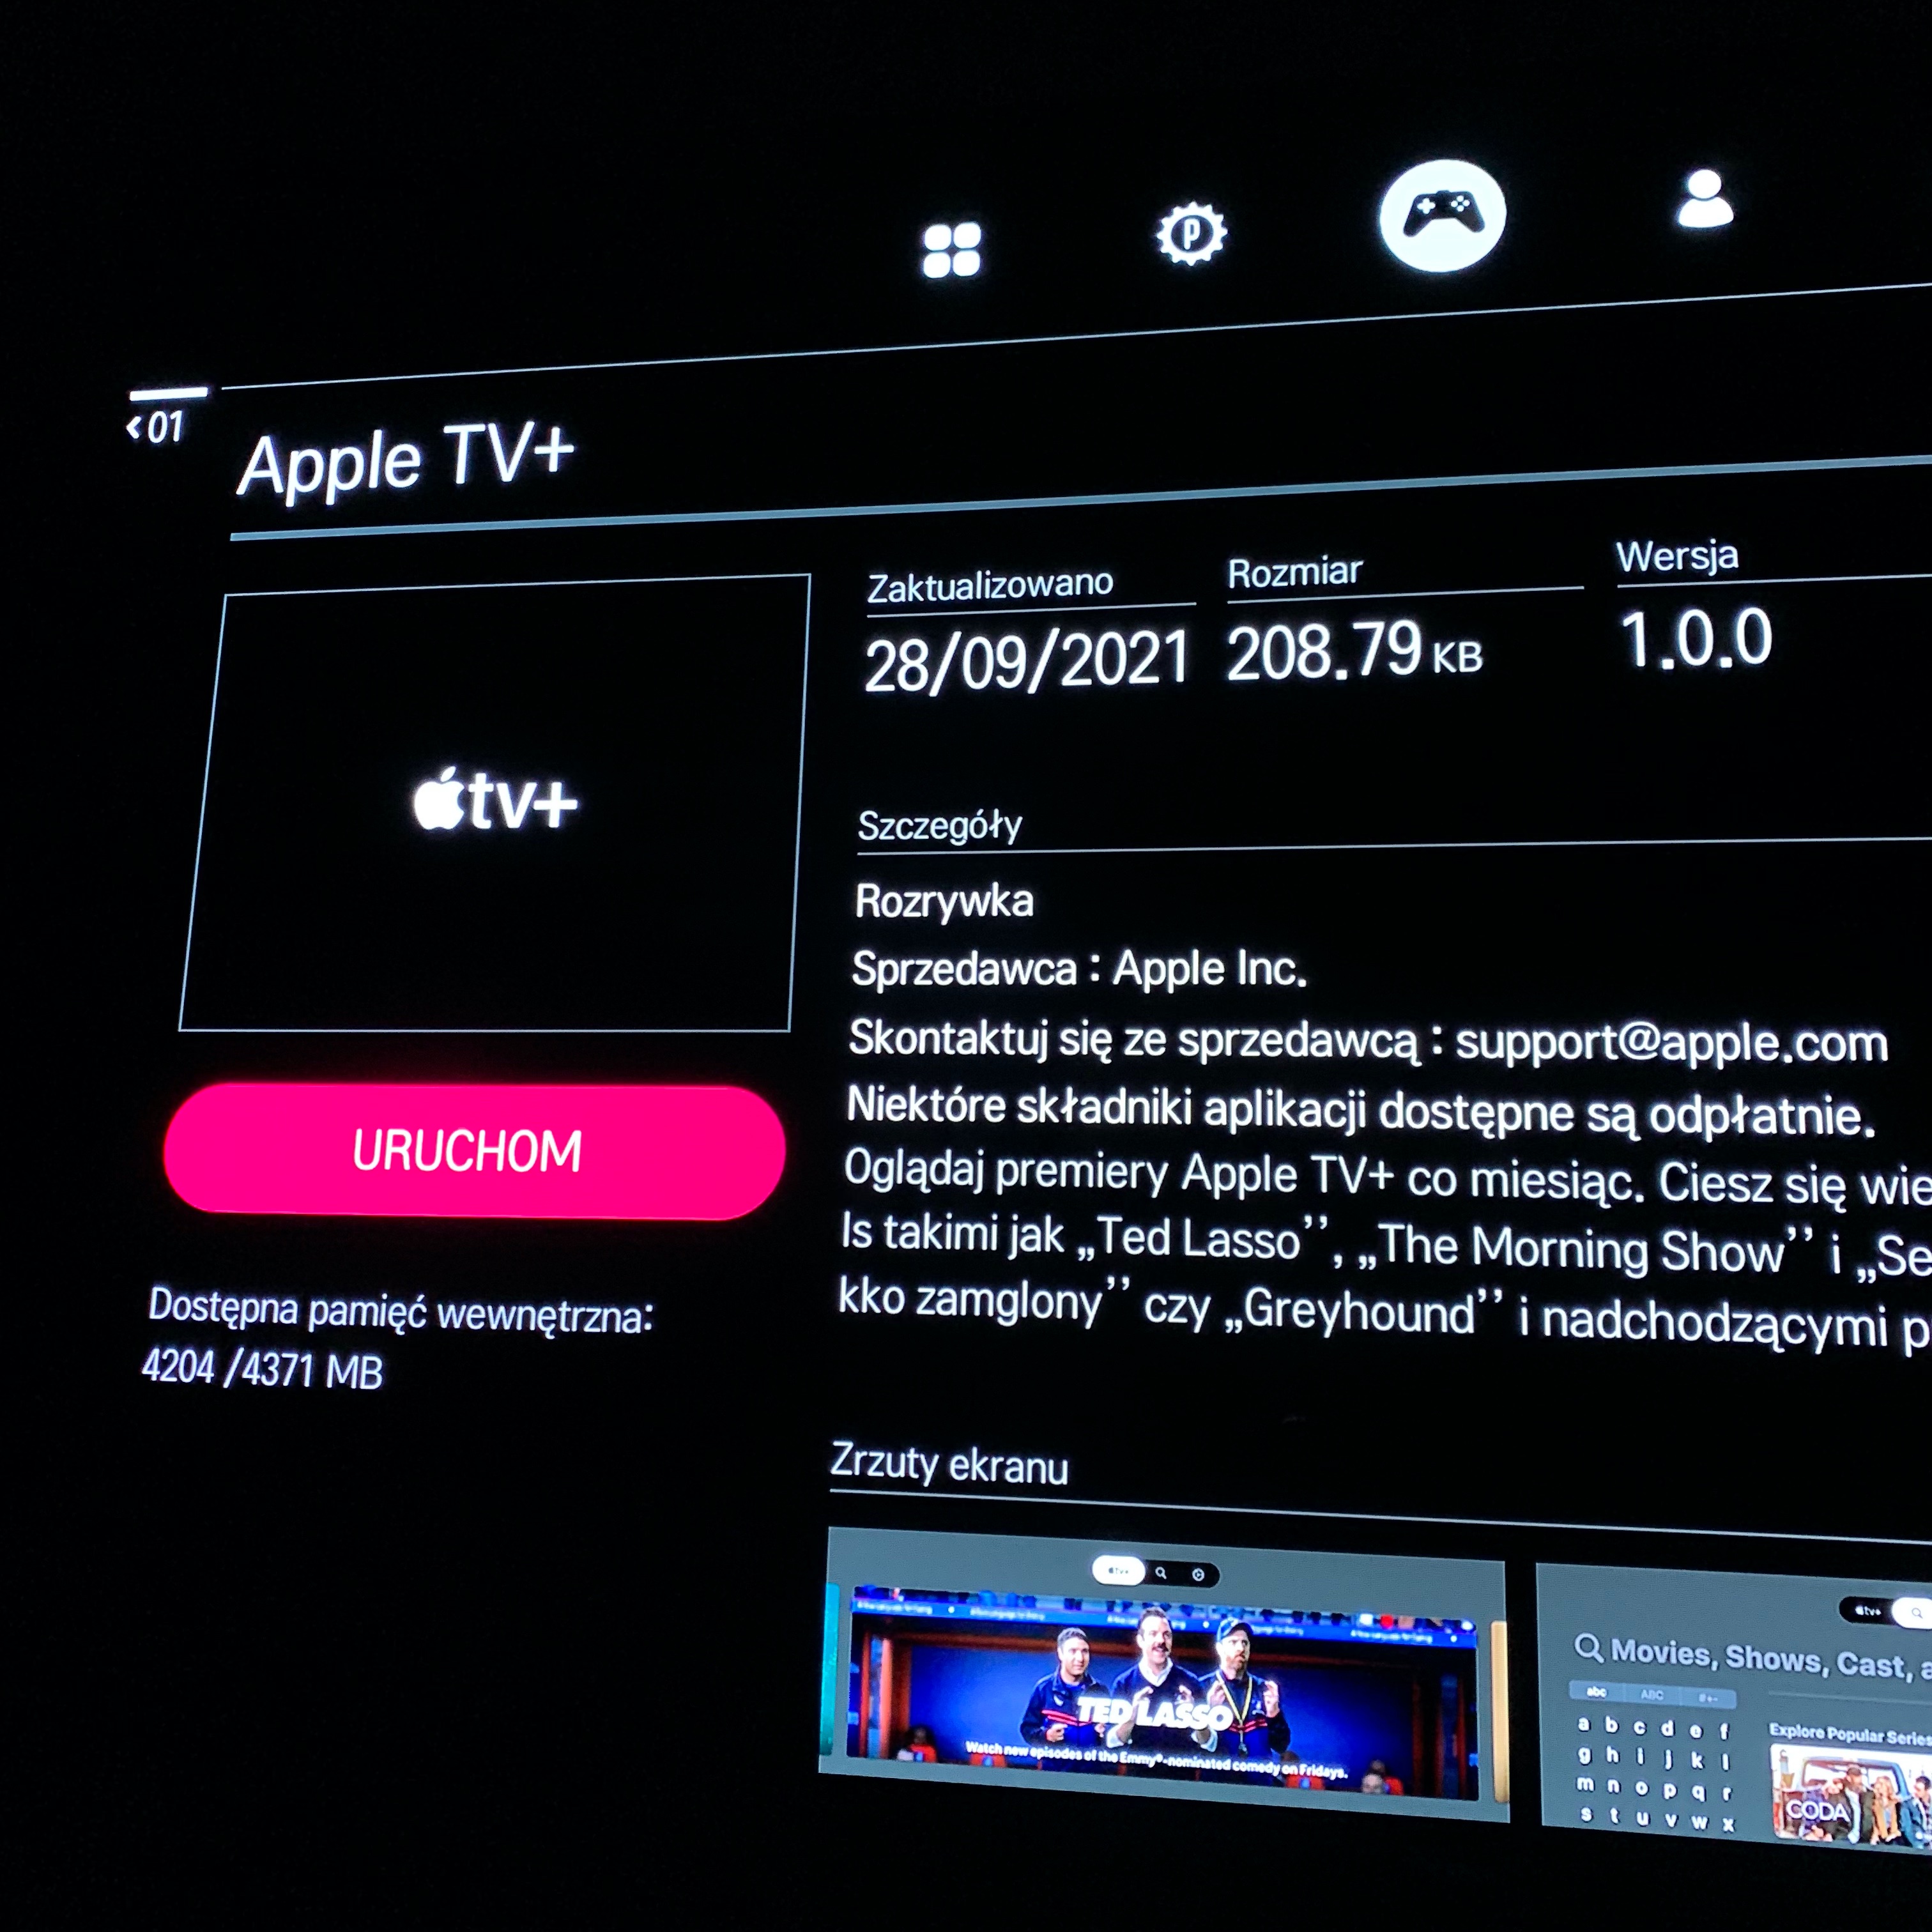 Ted Lasso Season Three Now Available on Apple TV+ - MacRumors